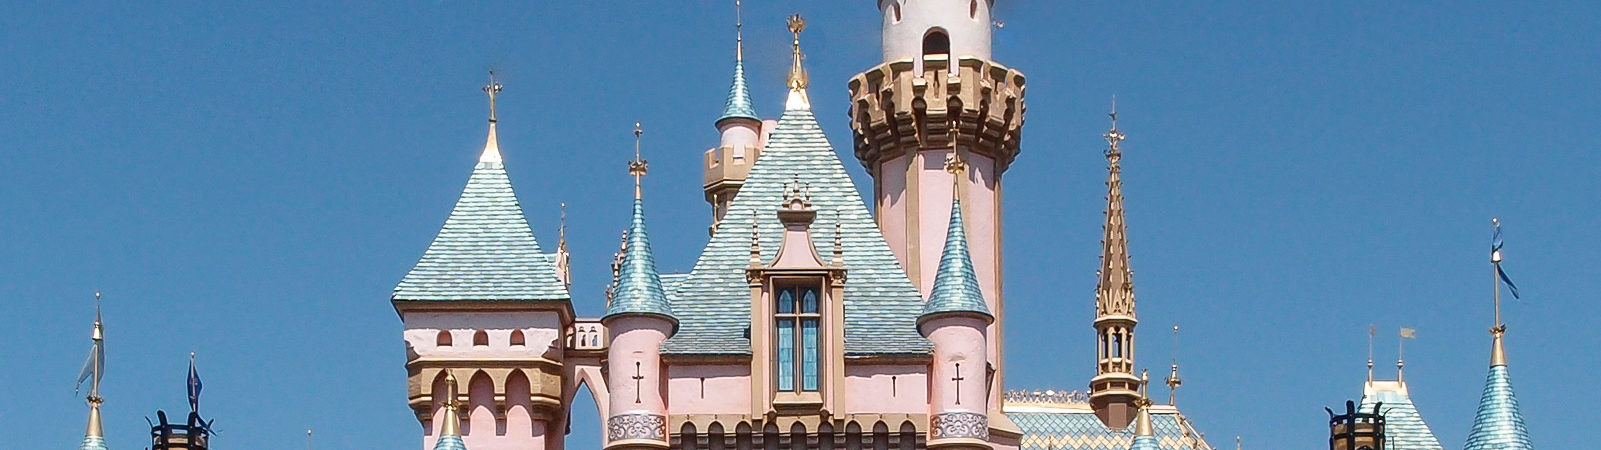 Sleeping Beauty Castle Disneyland Anaheim 2013